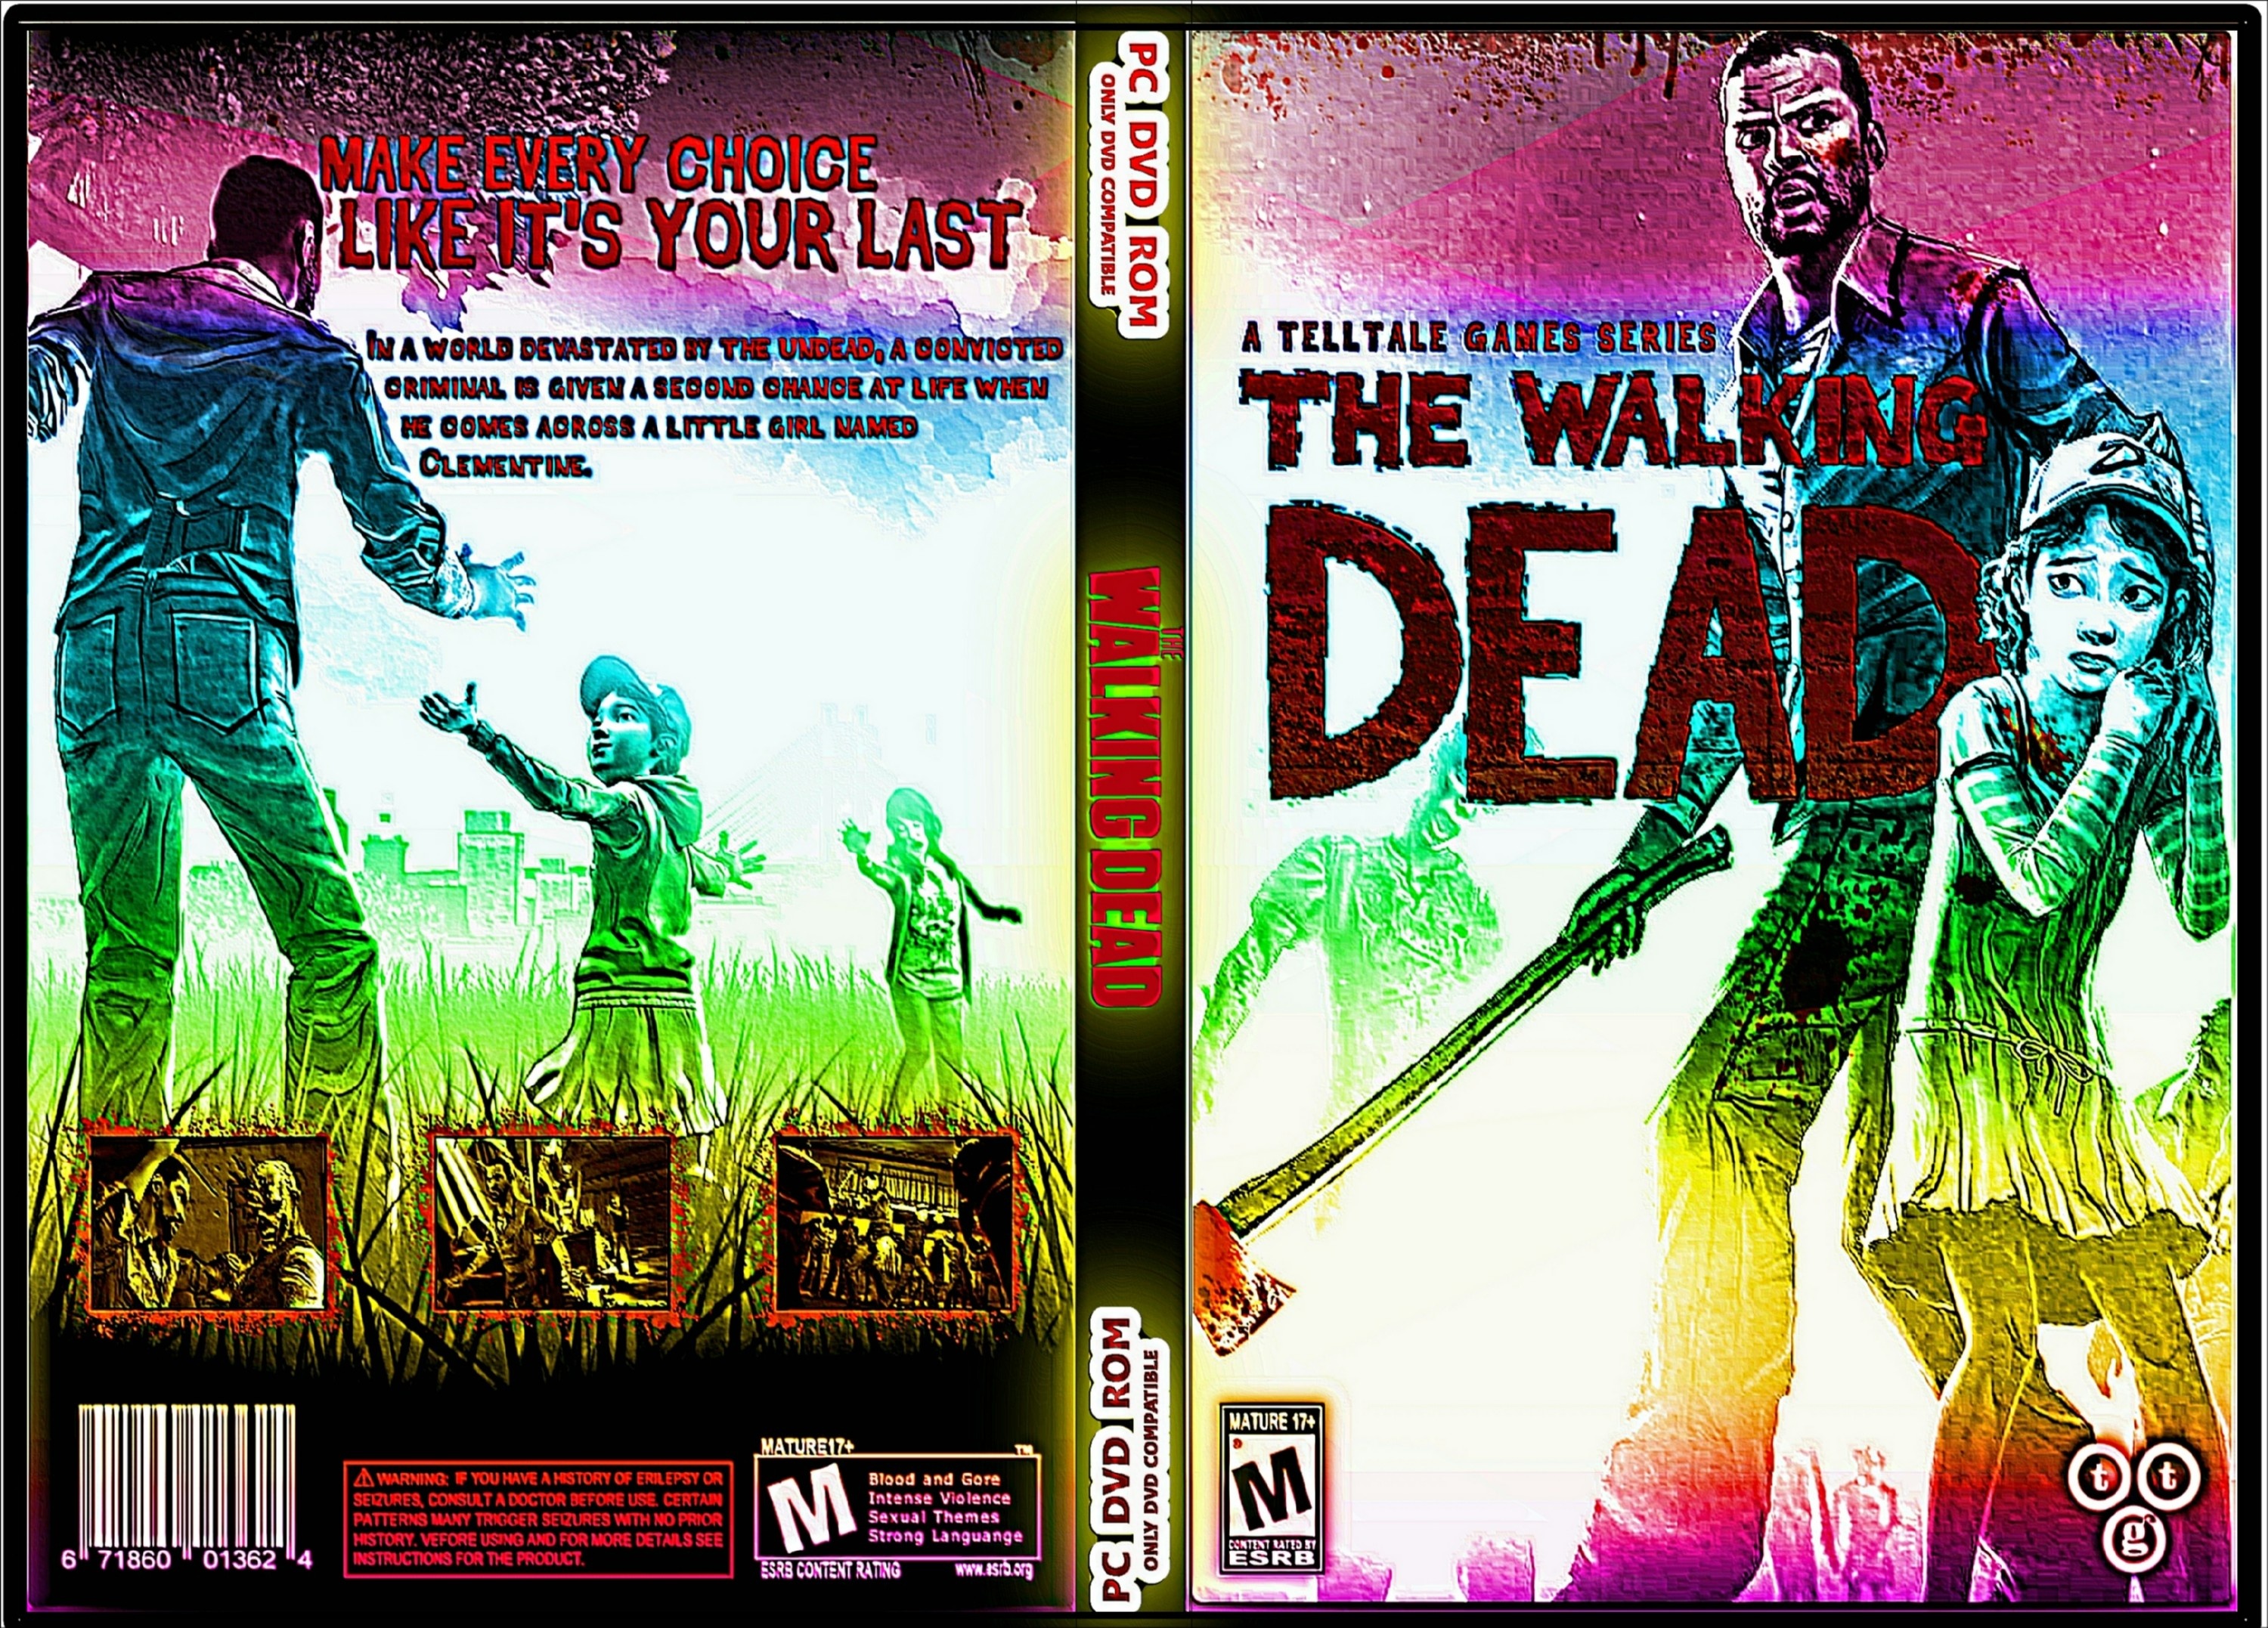 The Walking Dead - Season 1 box cover